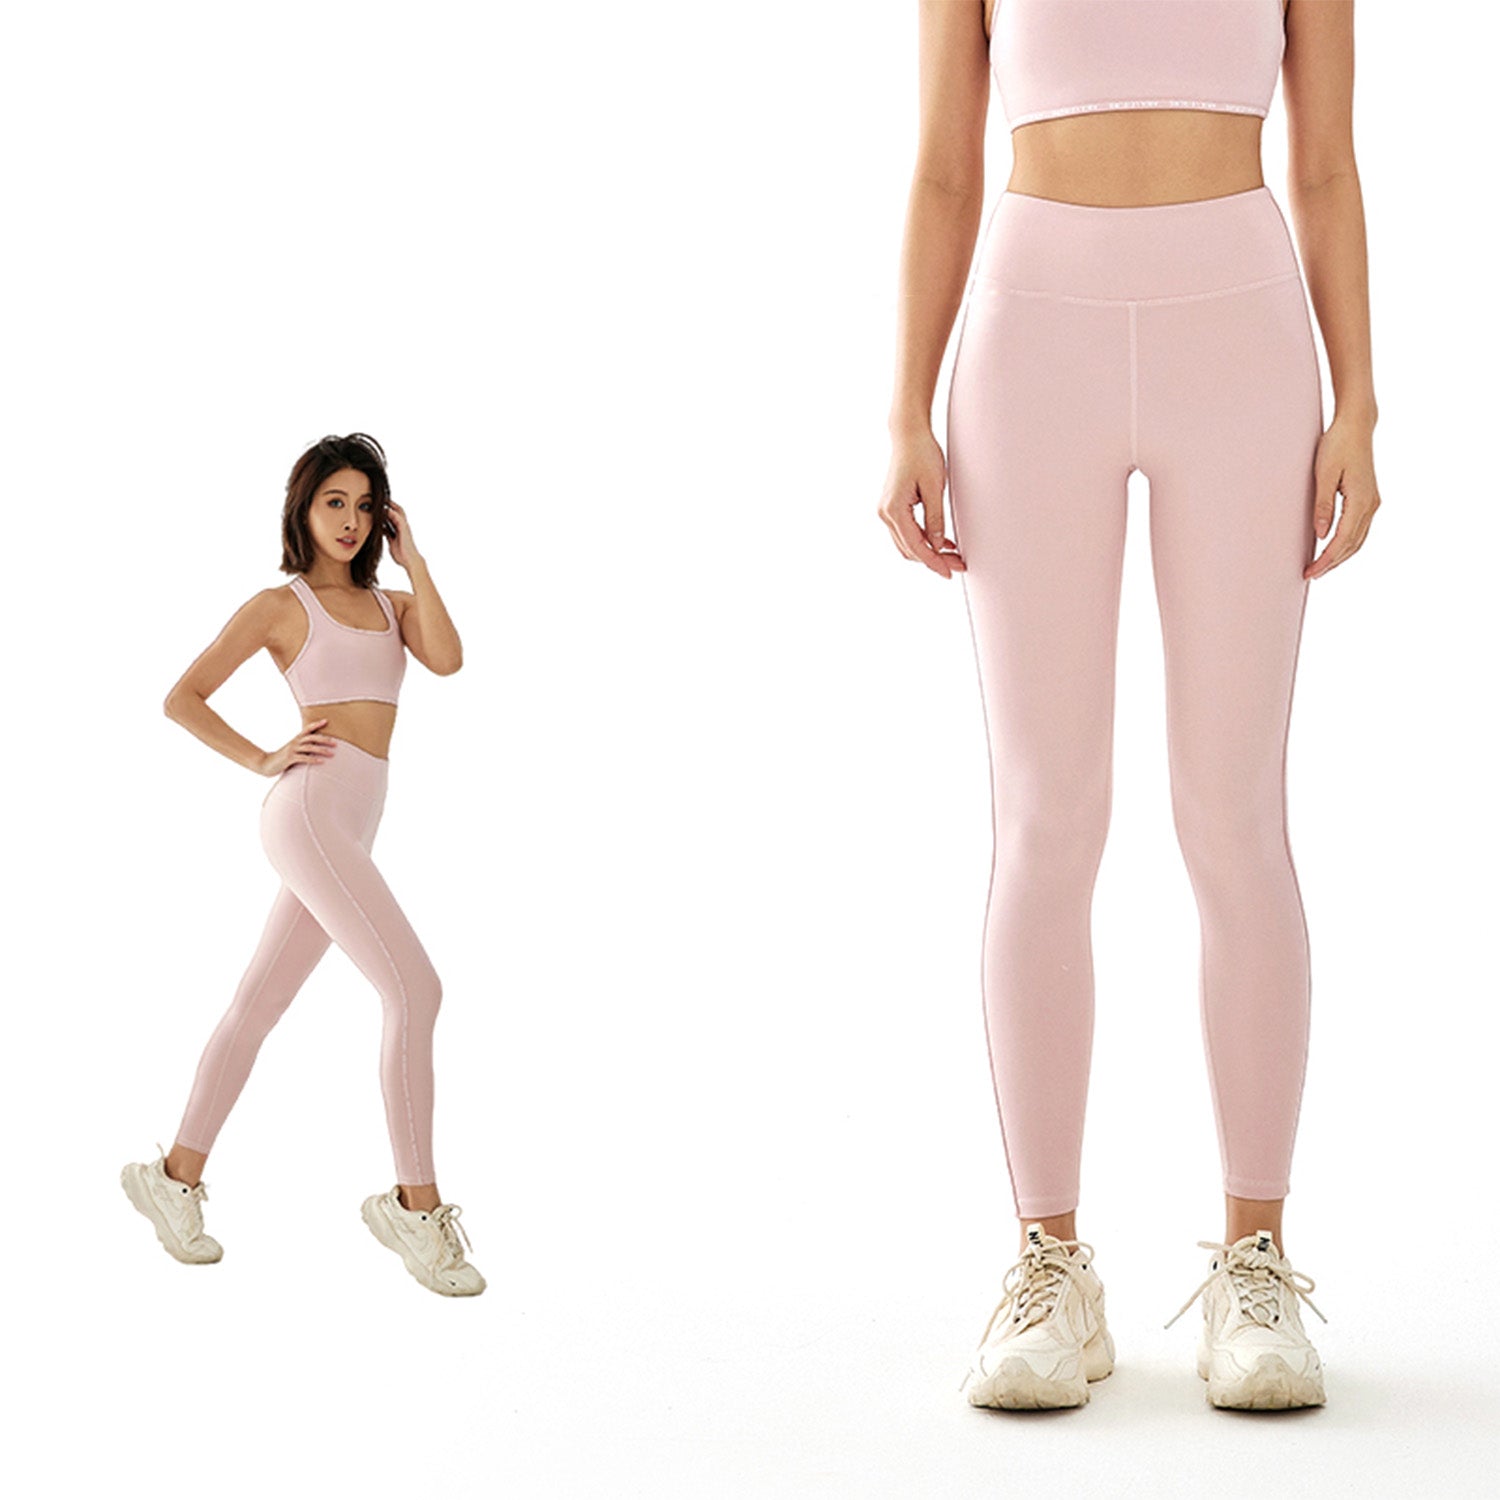 Buy Women's Tight Sports Training Yoga Pants by Body404